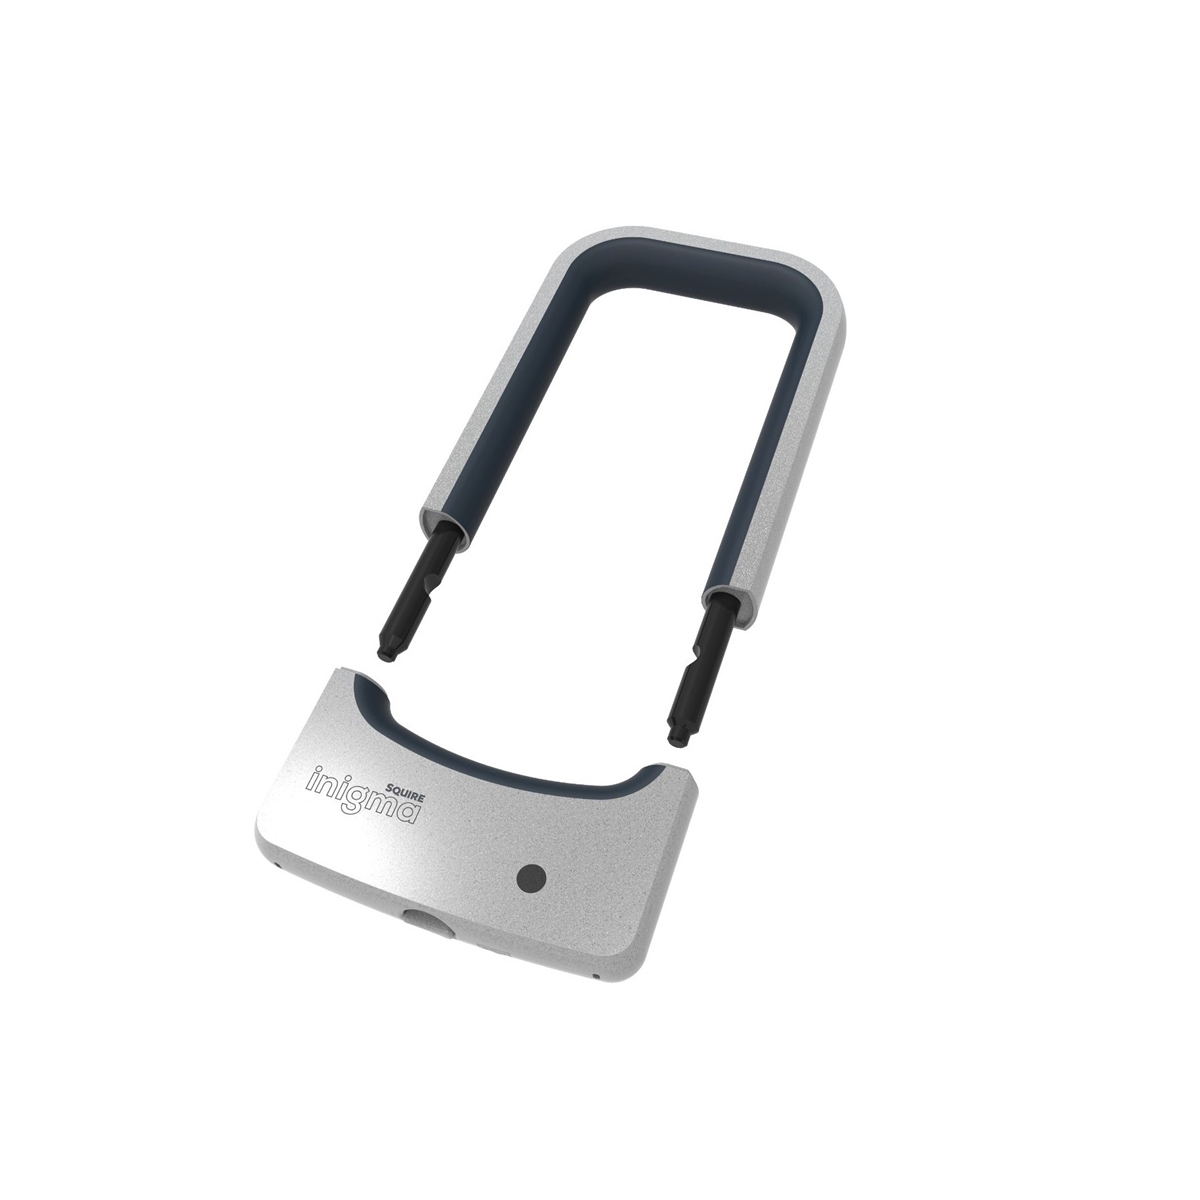 Bluetooth Bikelock Inigma BL1 190mm abierto/cierre con Smartphone